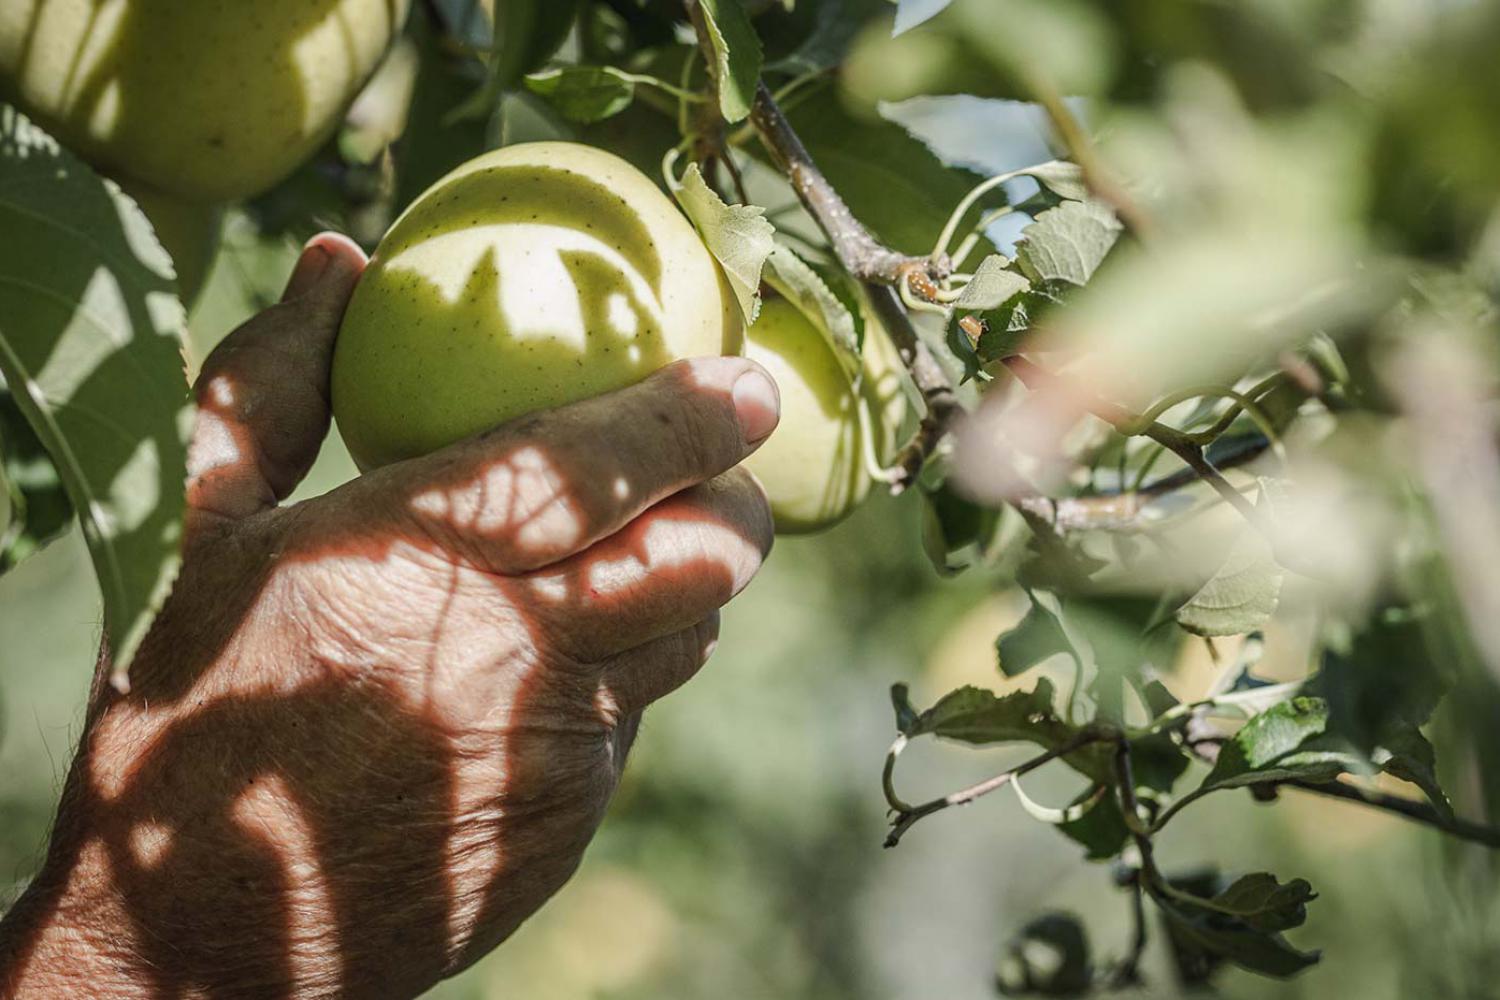 Raccolta delle mele in Alto Adige